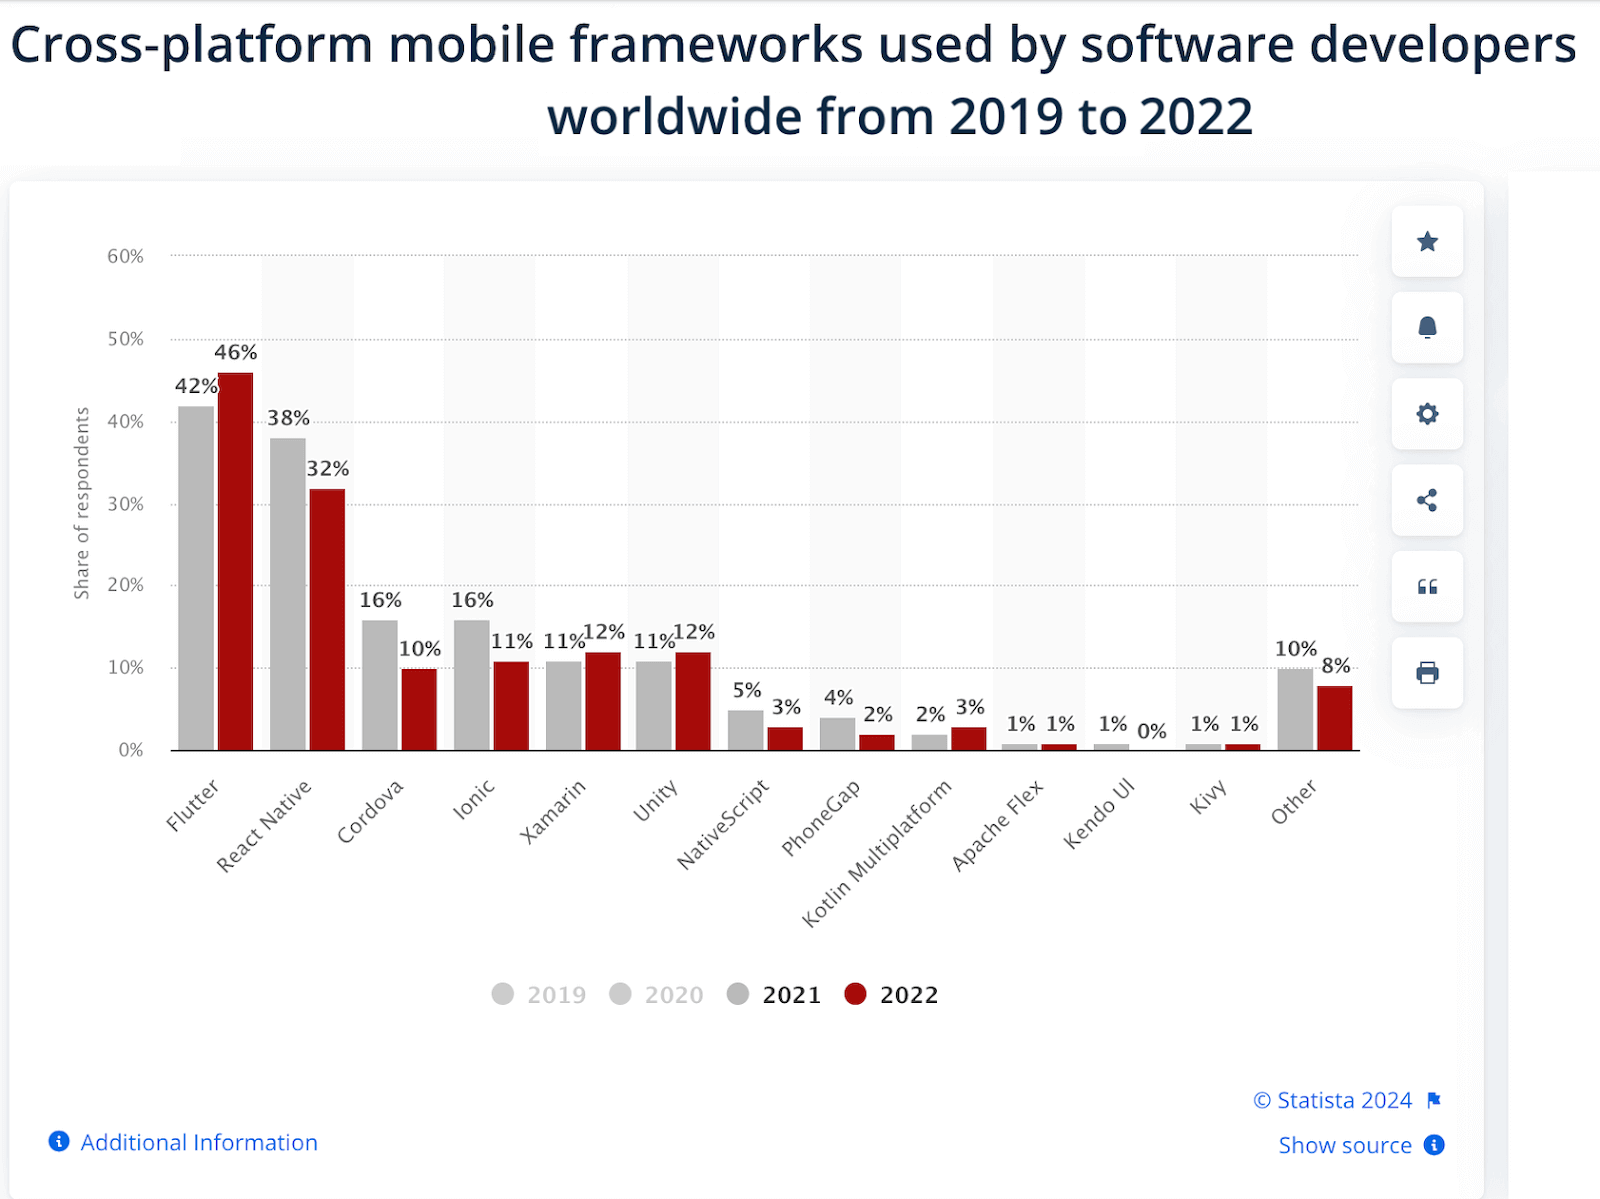 mobile app testing frameworks available in the market